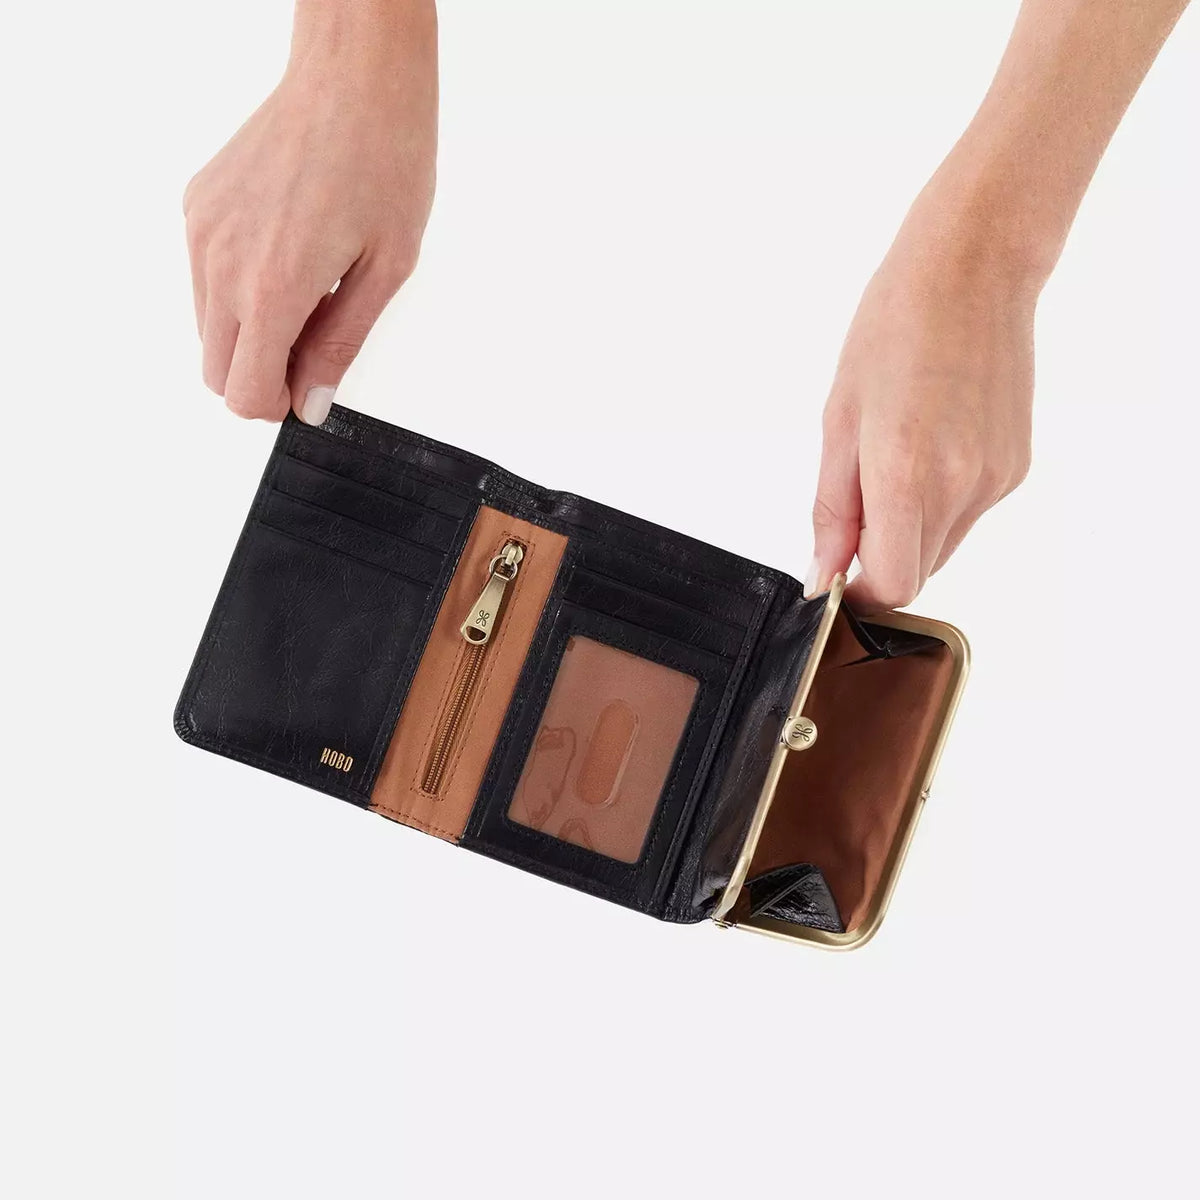 ROBIN Compact Wallet - Black